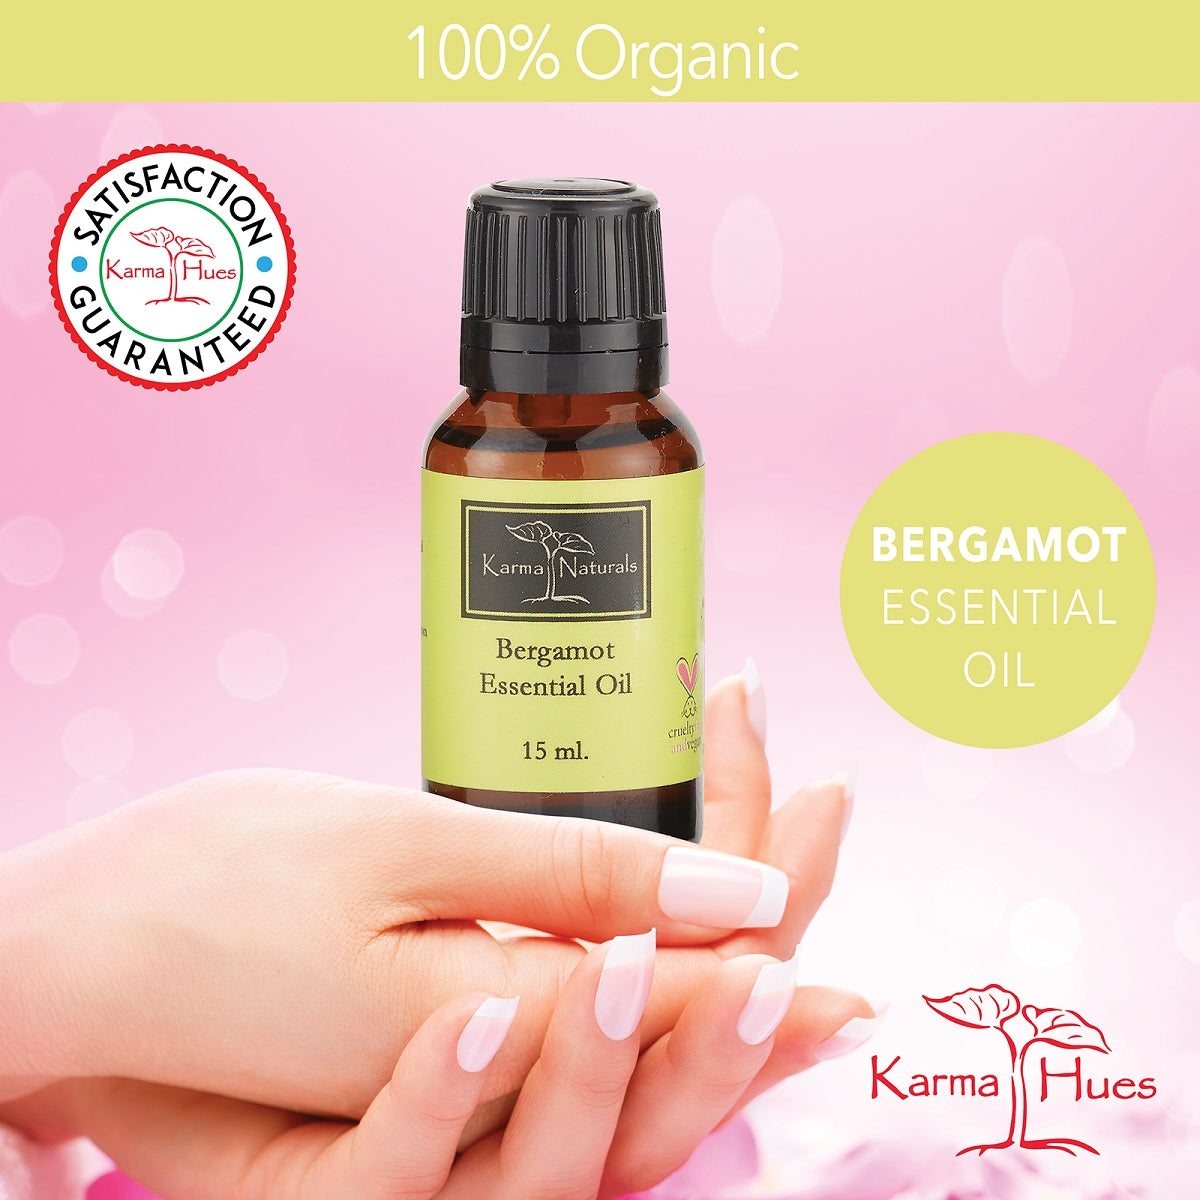 Karma Naturals Bergamot Essential Oil